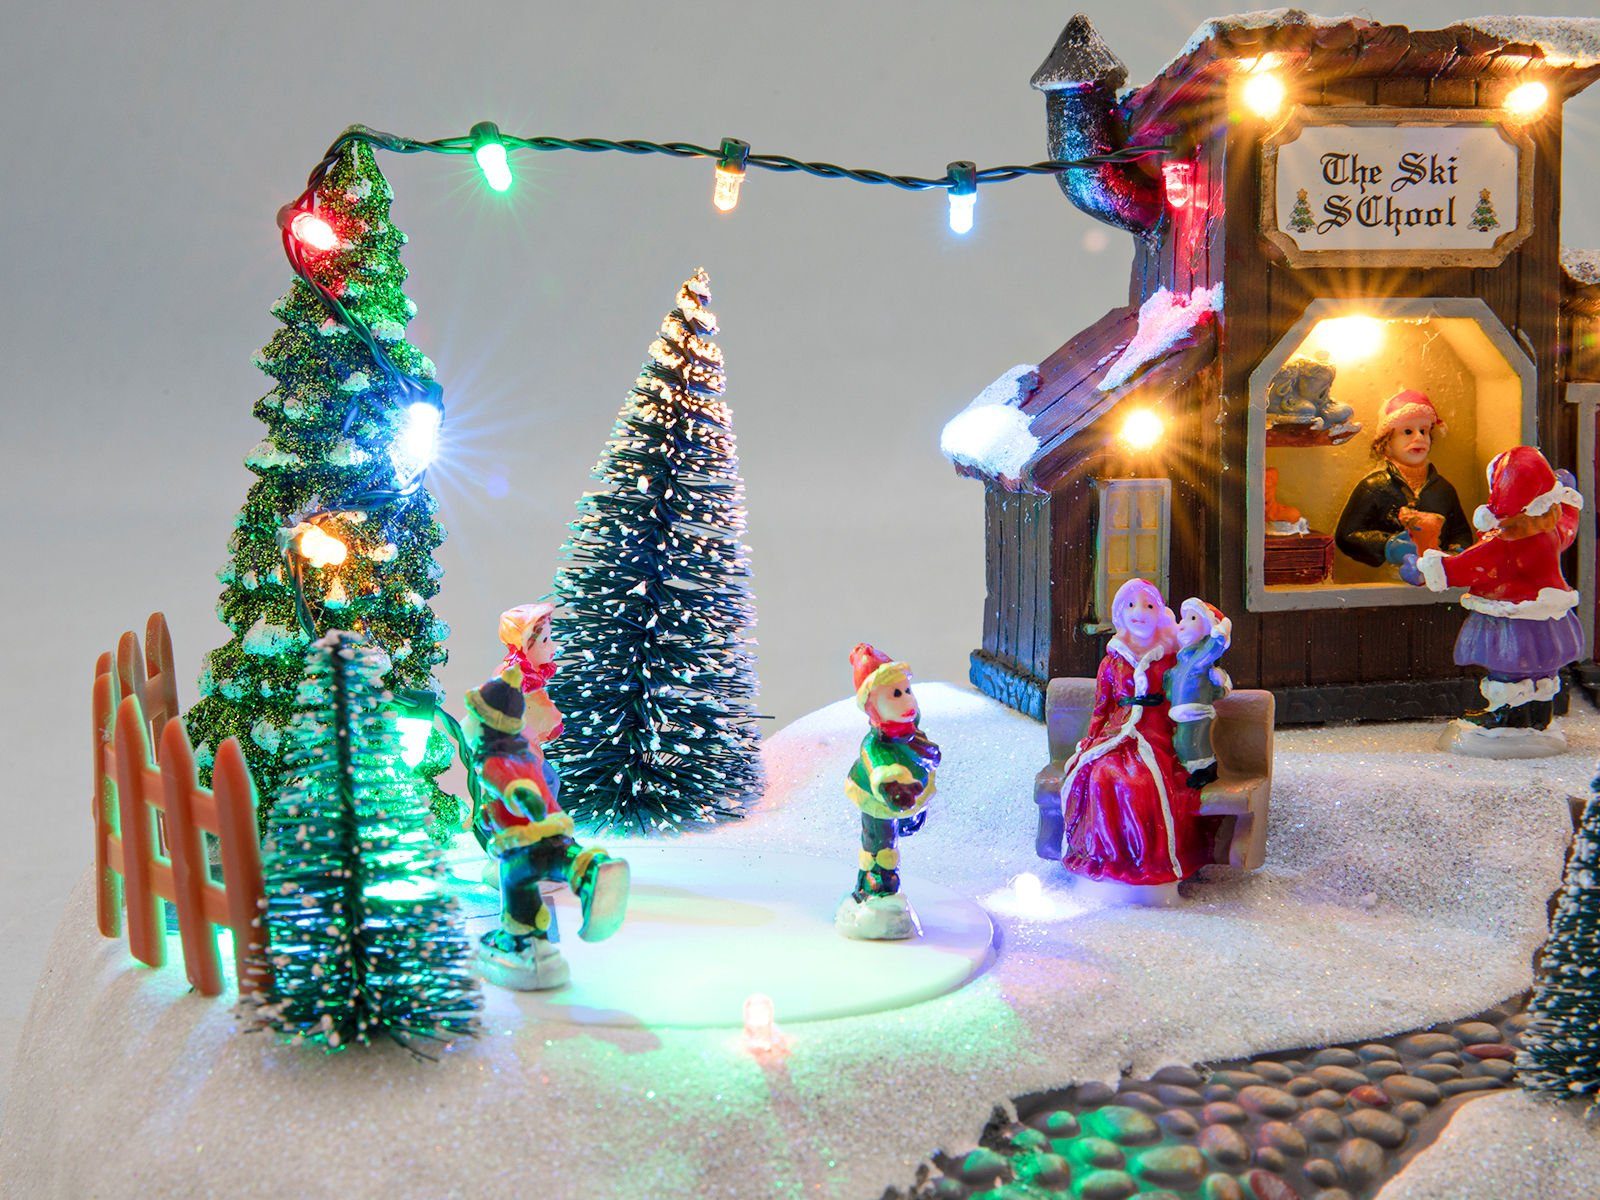 Spetebo Weihnachtsszene Eisbahn mit fahrenden SKI SCHOOL - Figuren THE